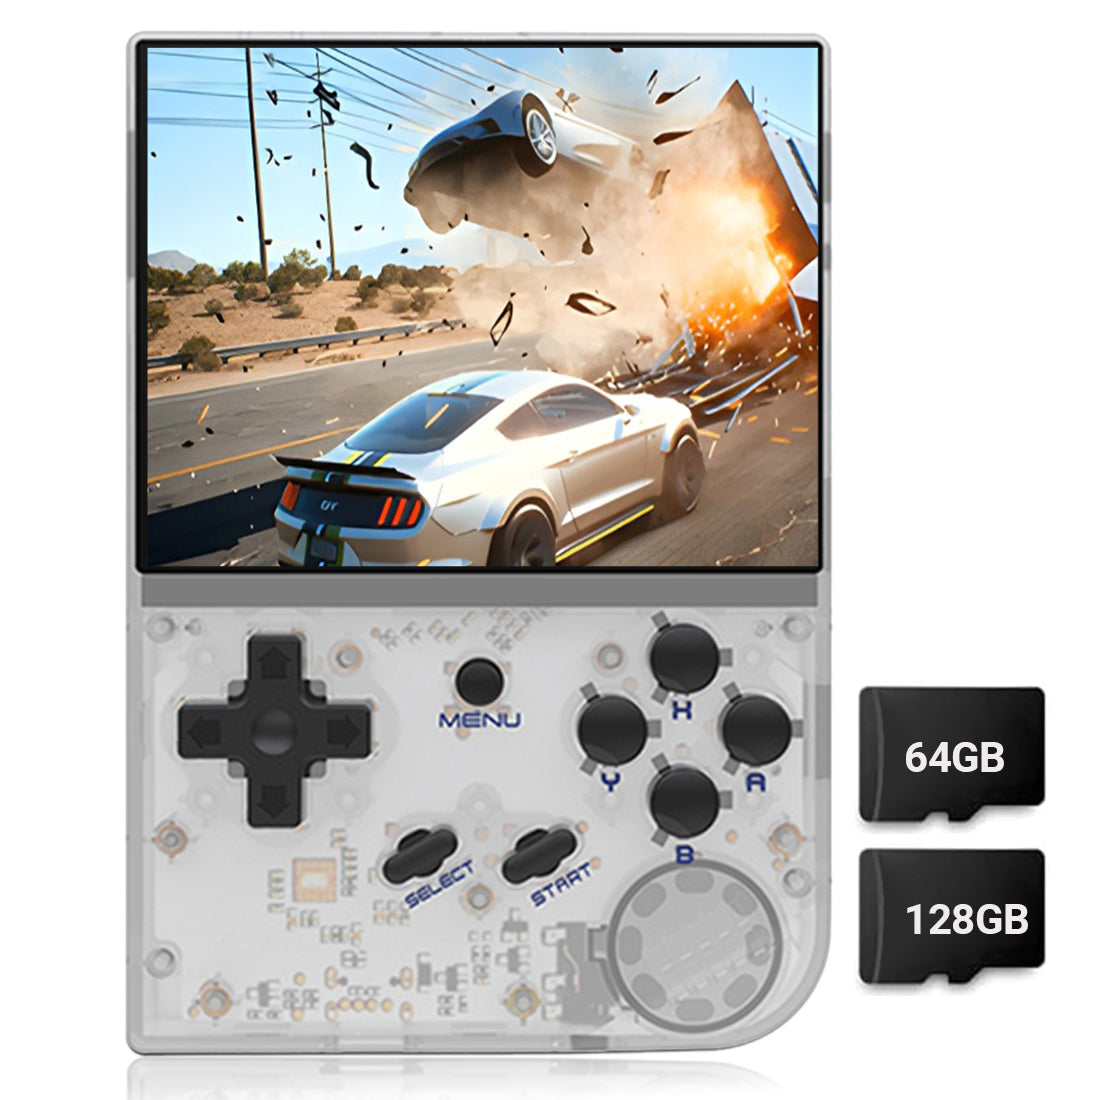 Anbernic RG35XX Impressions — “Mini” Budget Handheld 